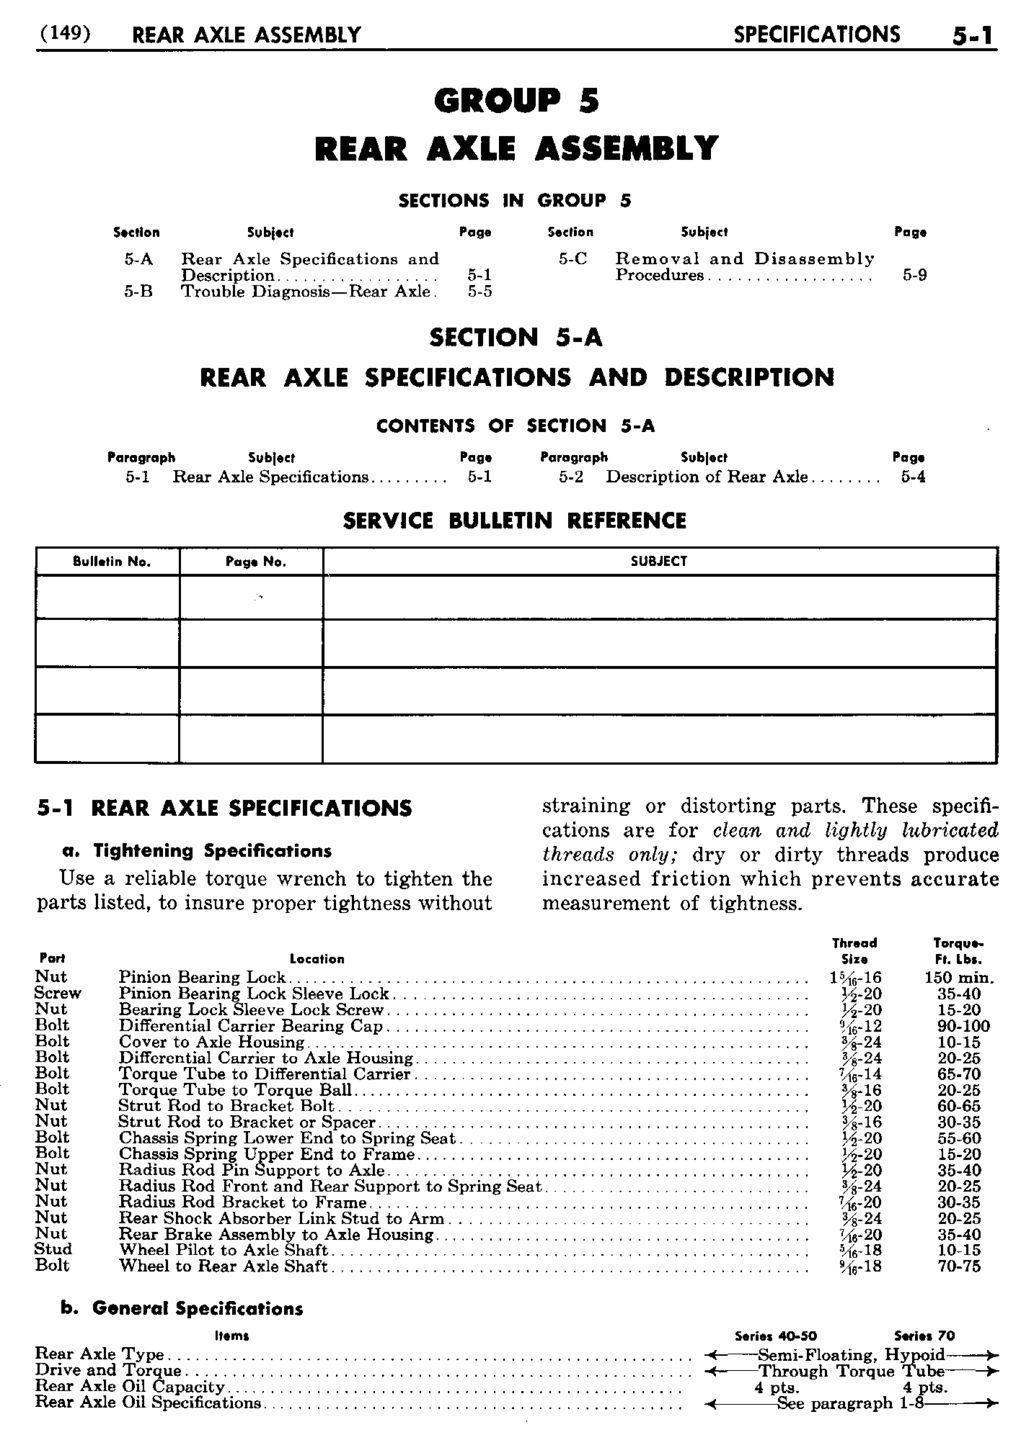 n_06 1950 Buick Shop Manual - Rear Axle-001-001.jpg